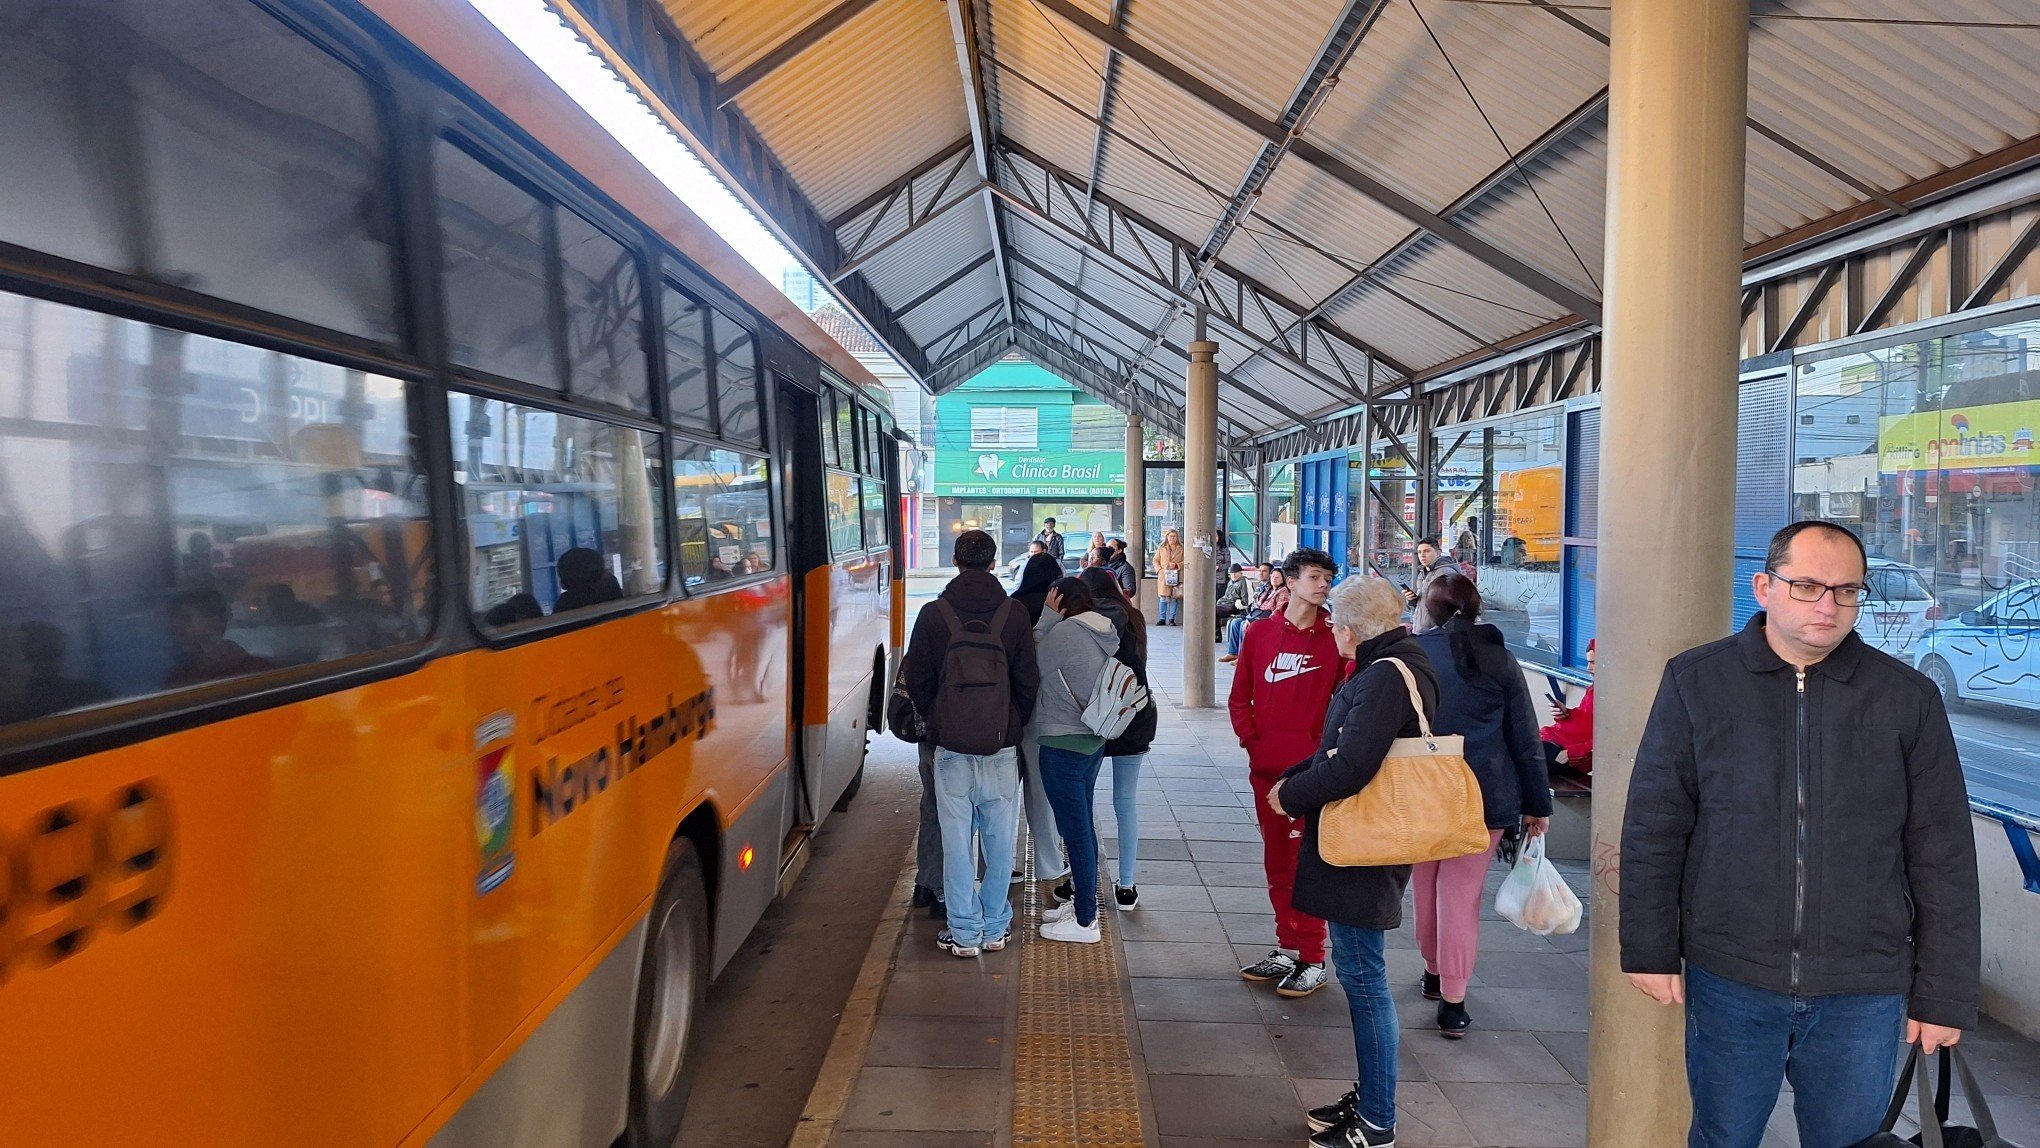 NOVO HAMBURGO: Movimento estudantil fará protesto para denunciar problemas no transporte público